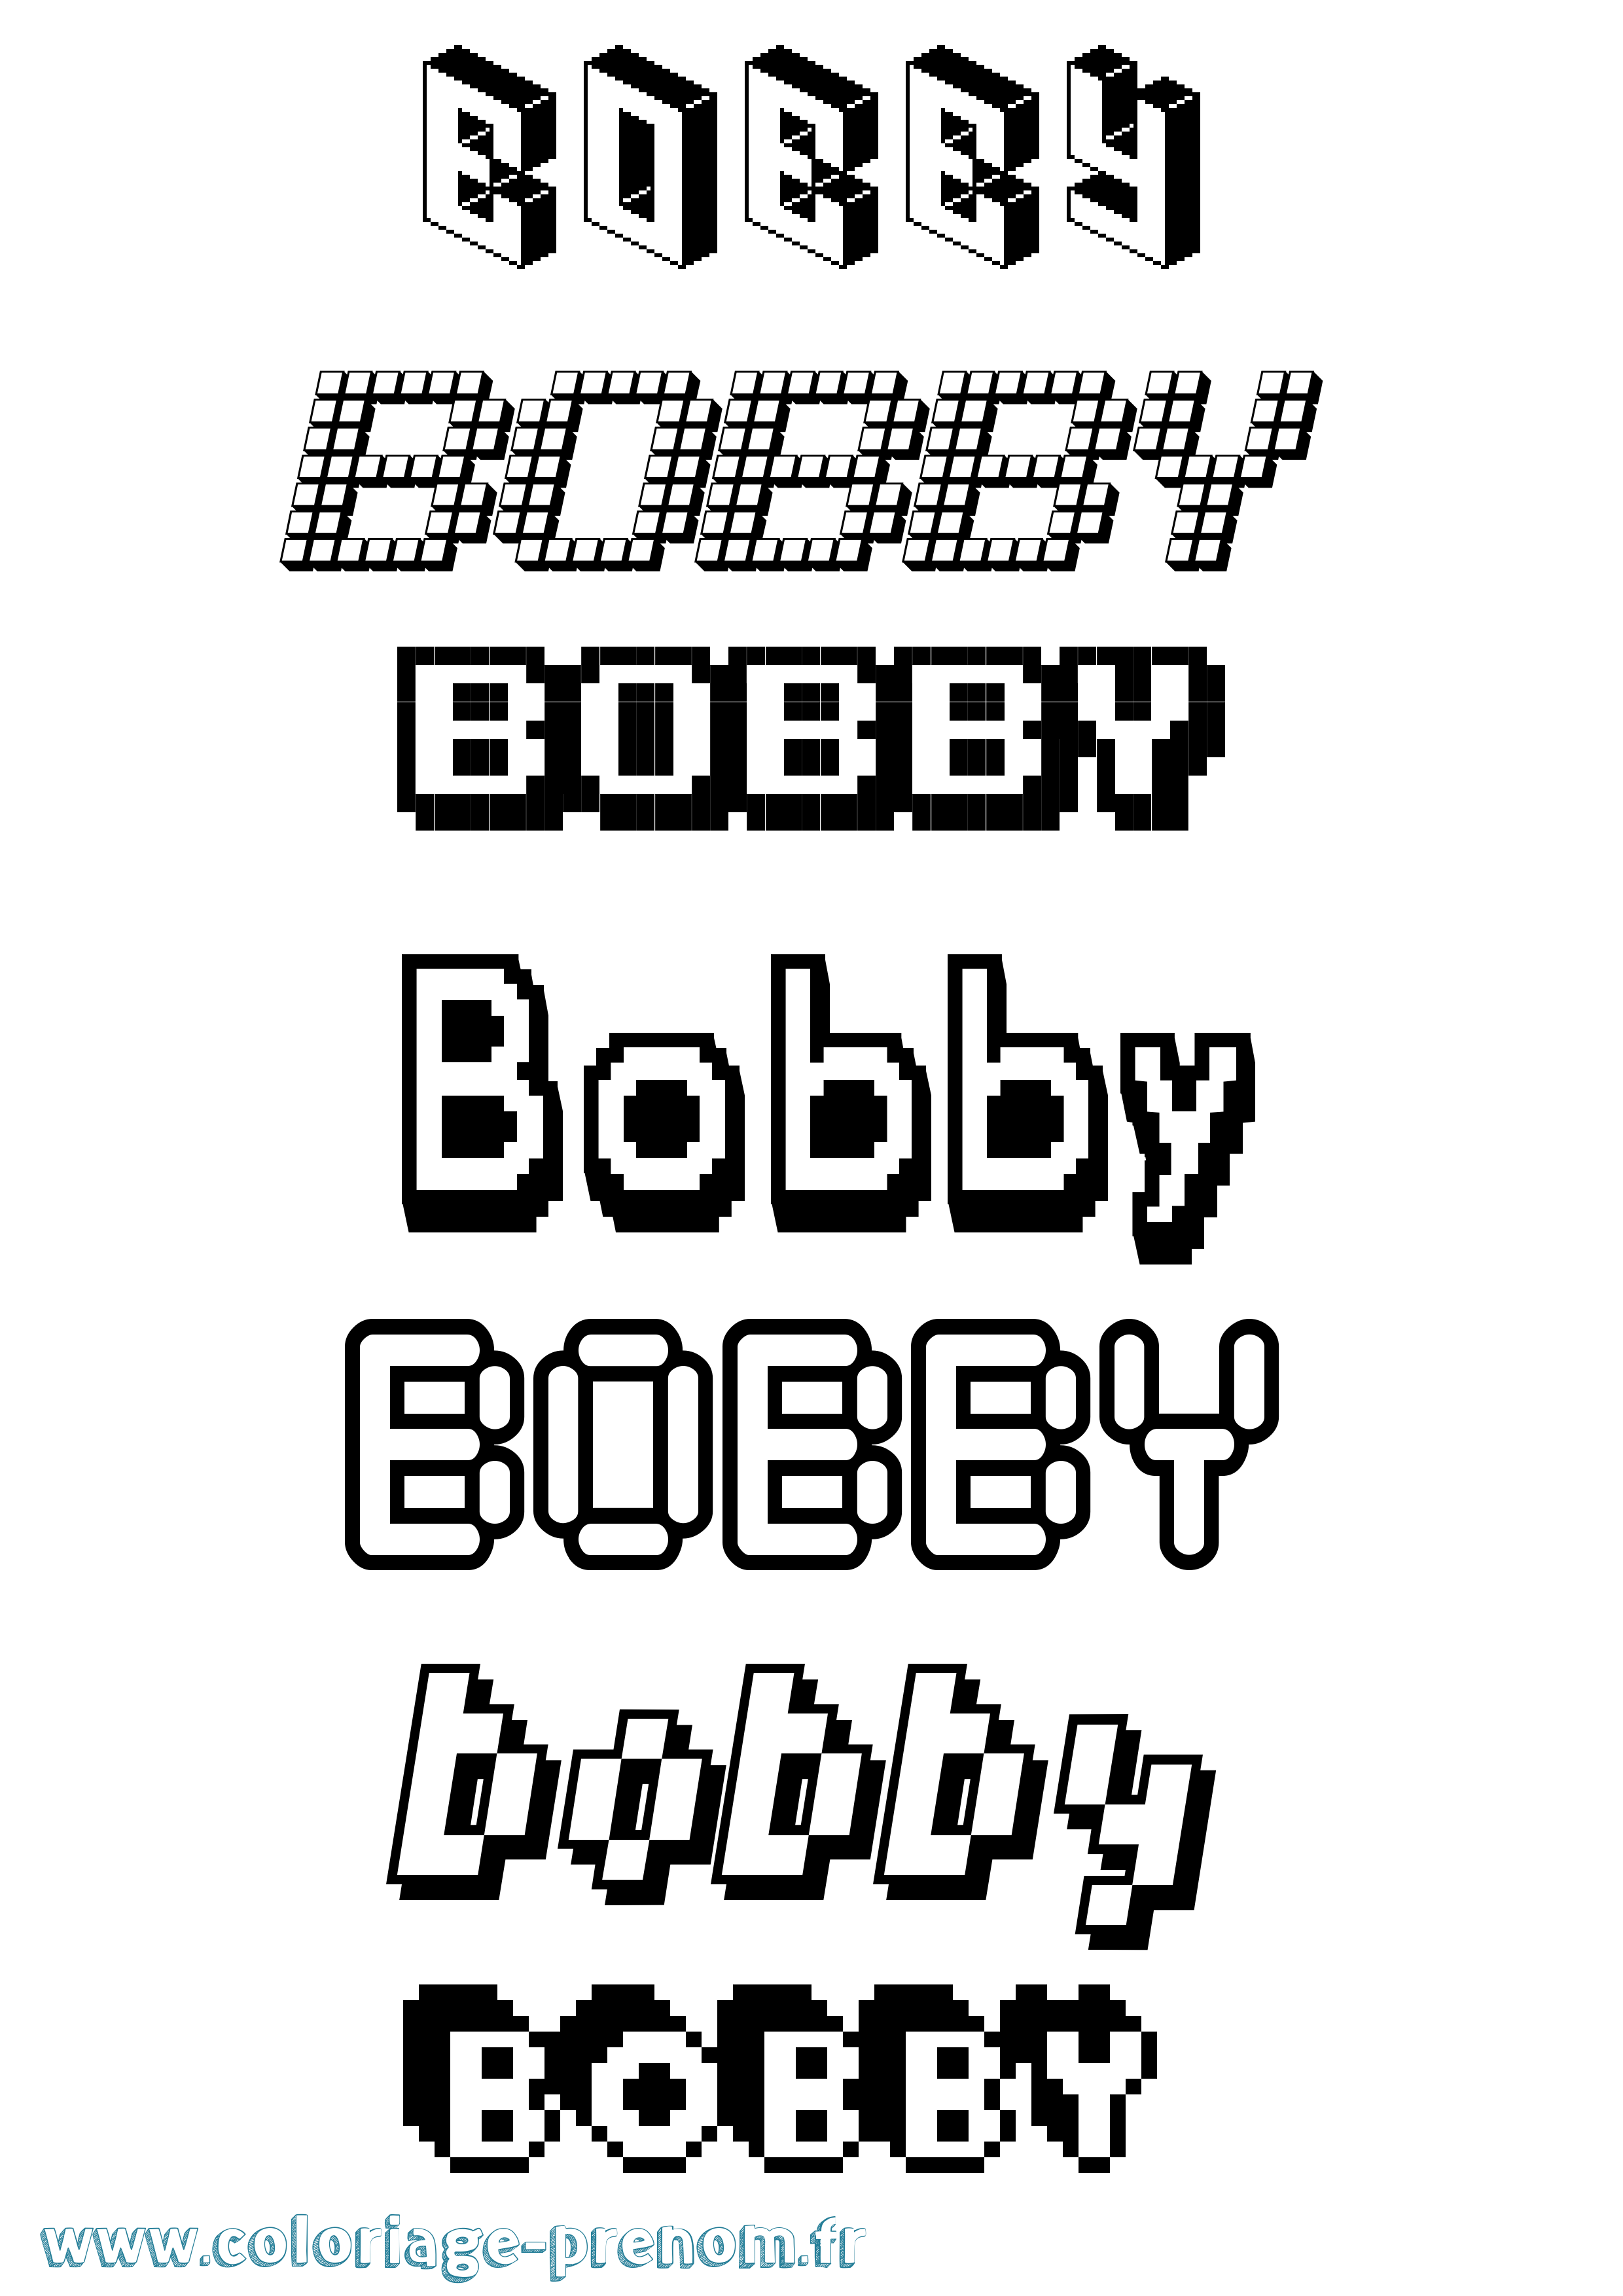 Coloriage prénom Bobby Pixel